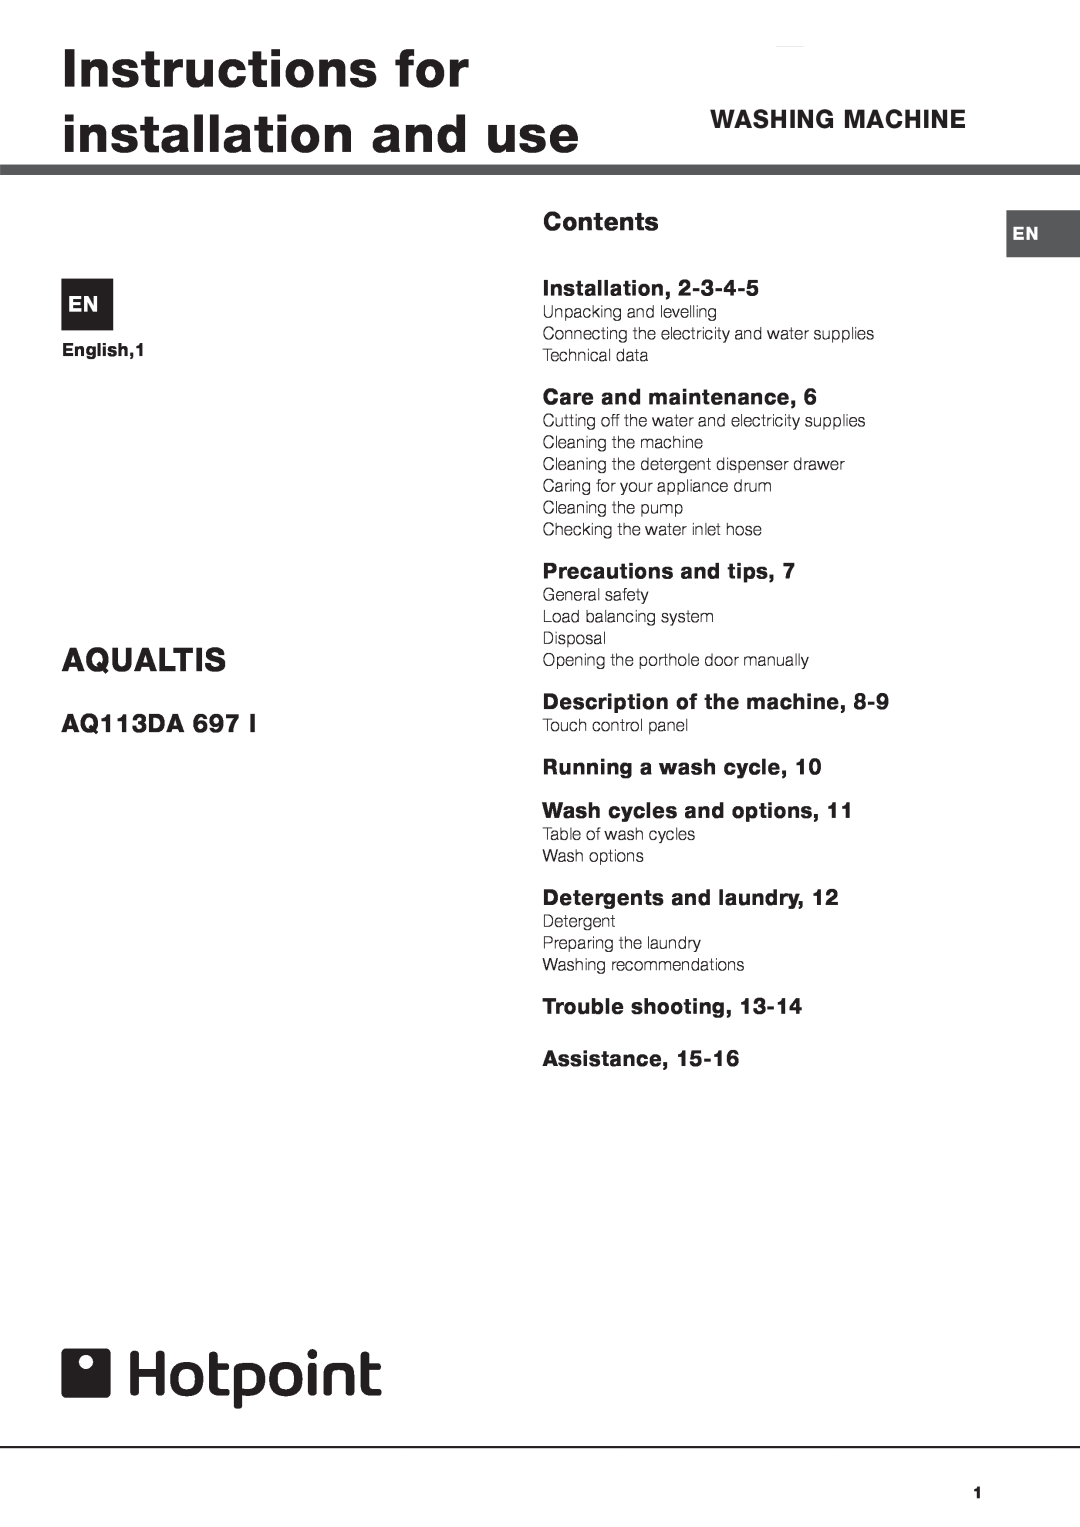 Hotpoint aq133da 697i manual Instructions for installation and use, Aqualtis, Washing Machine, AQ113DA 697, Contents 